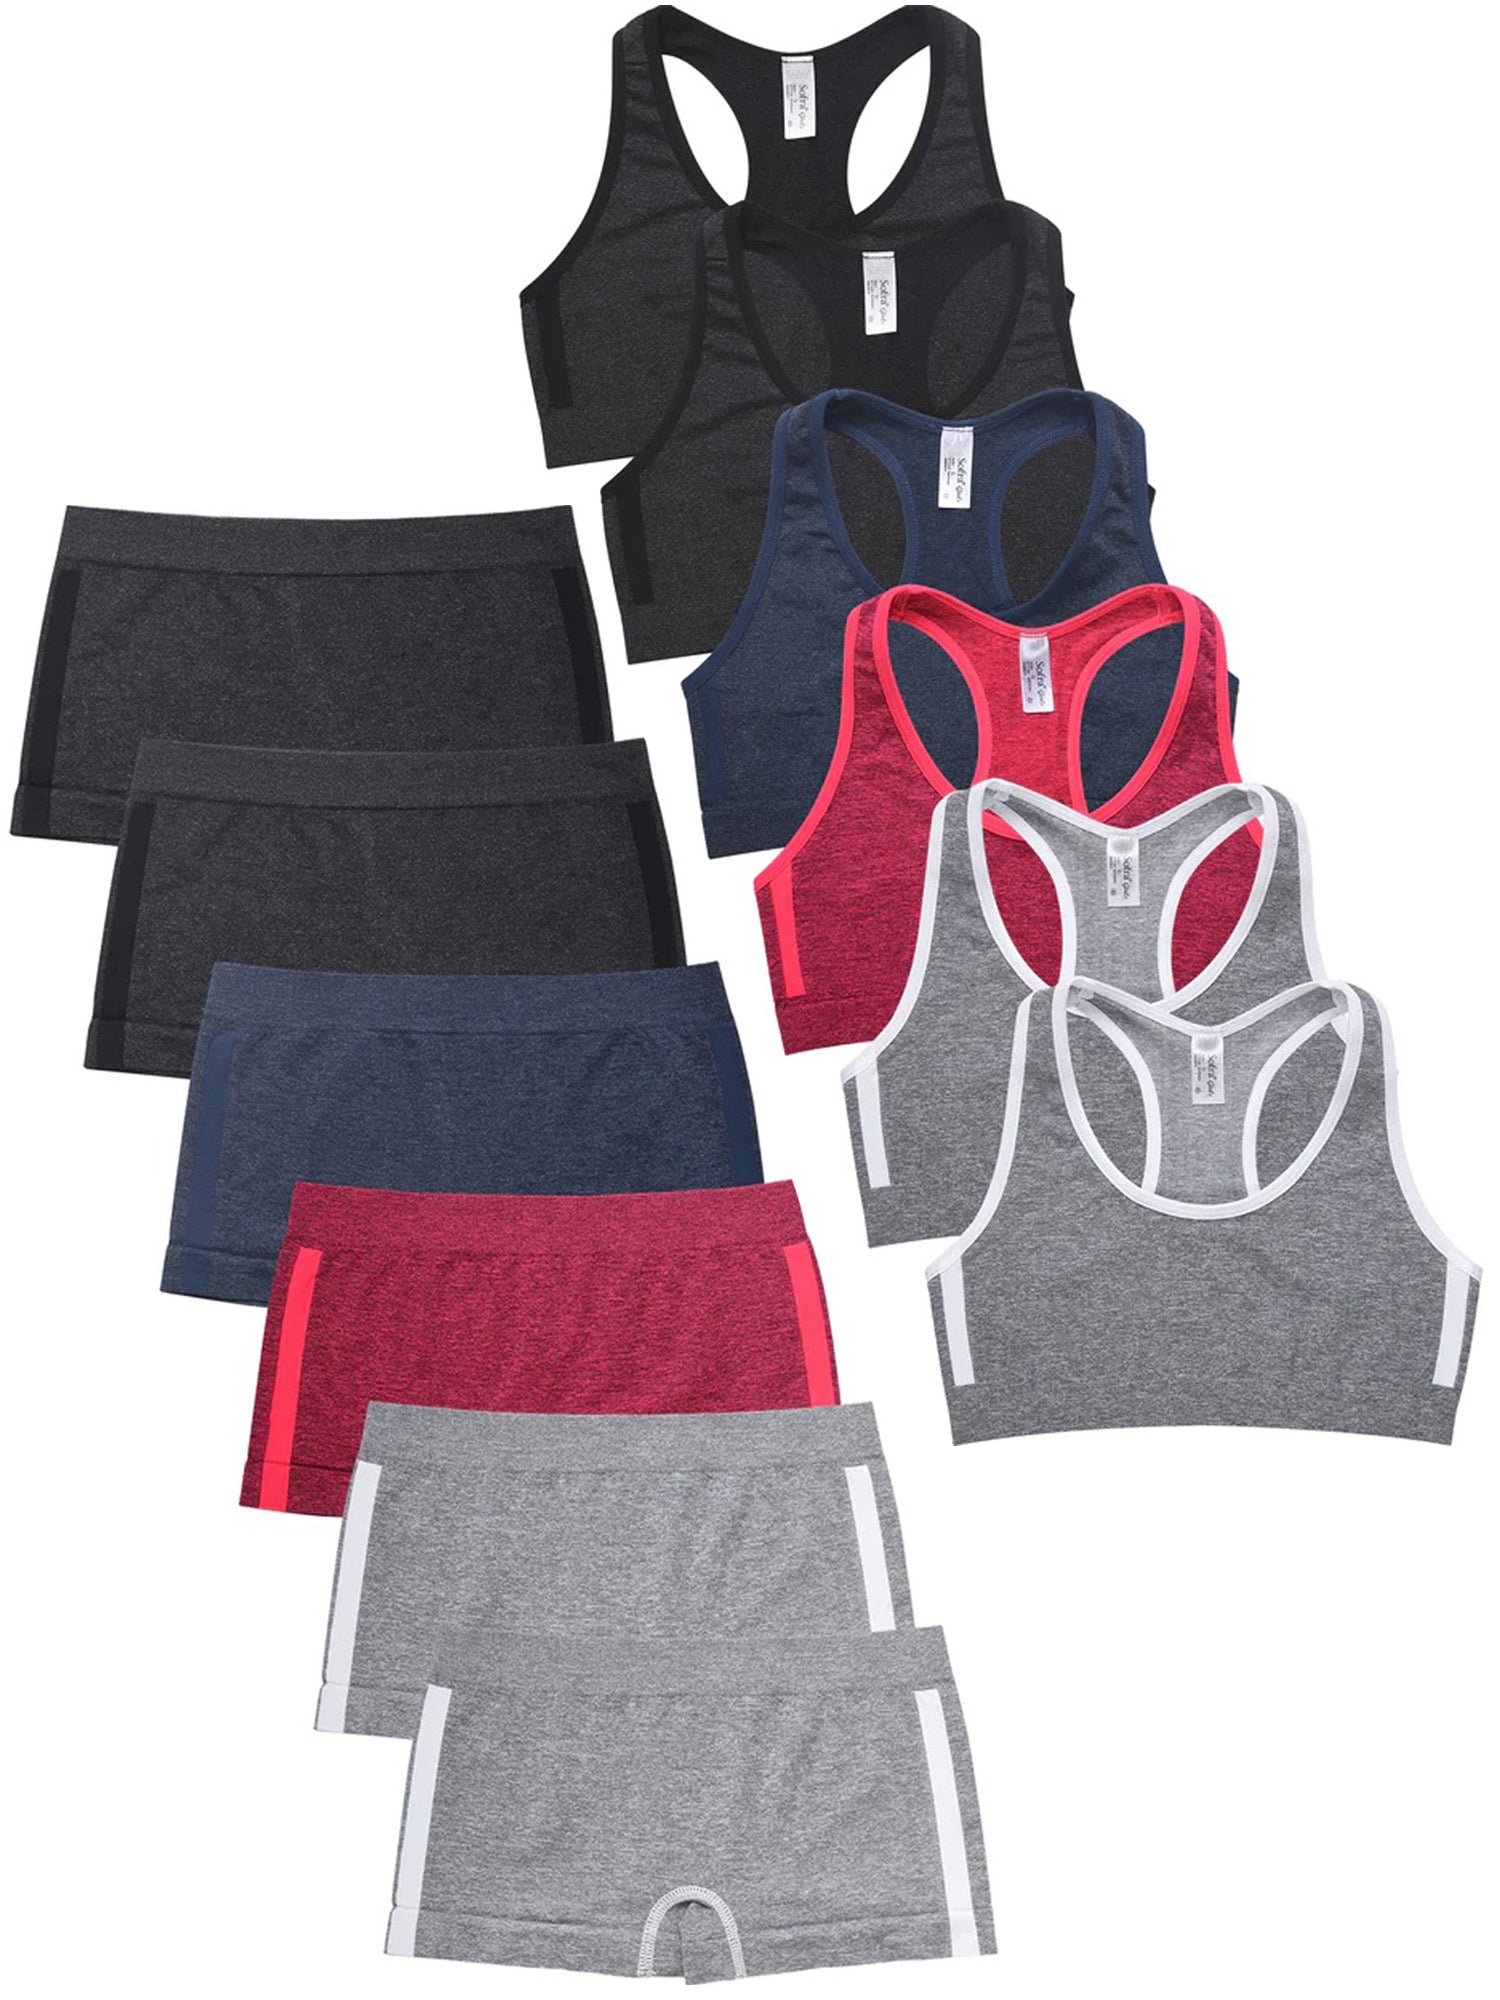 6 Packs of Sofra Girls Seamless Sports Boyshorts Panty and Training Bra Sets